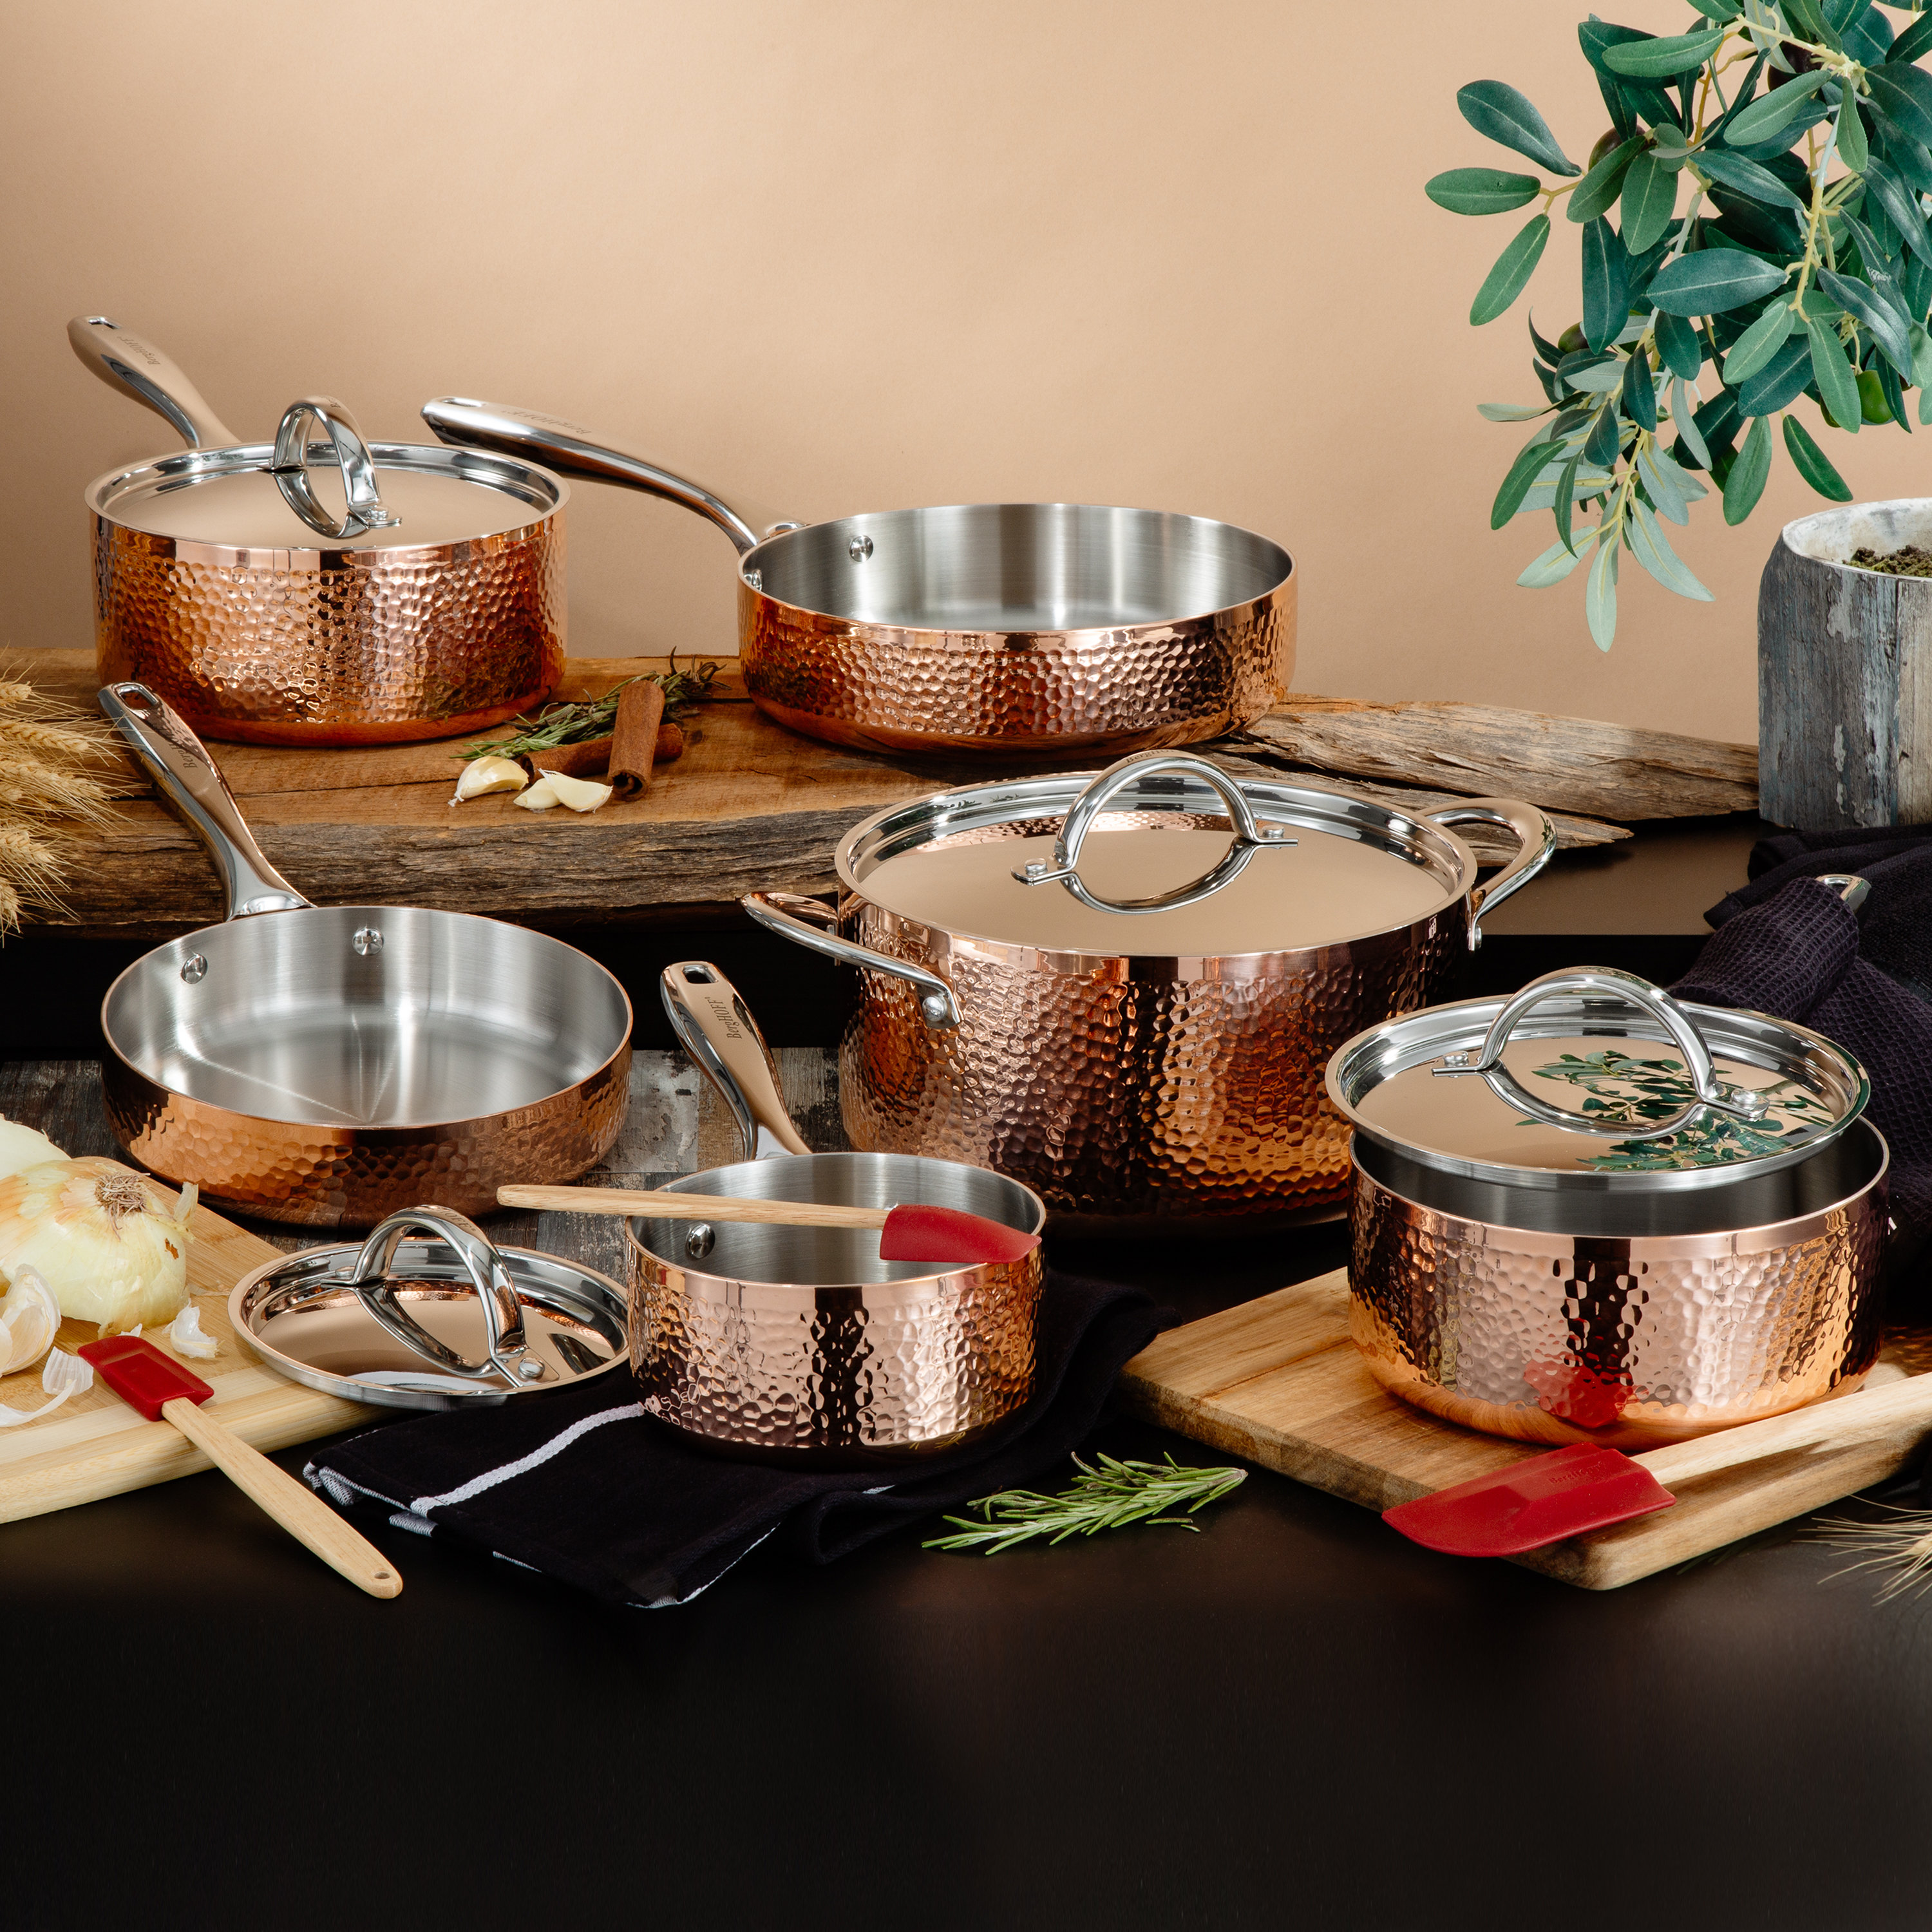 Hestan CopperBond 10-Piece Cookware Set - Copper